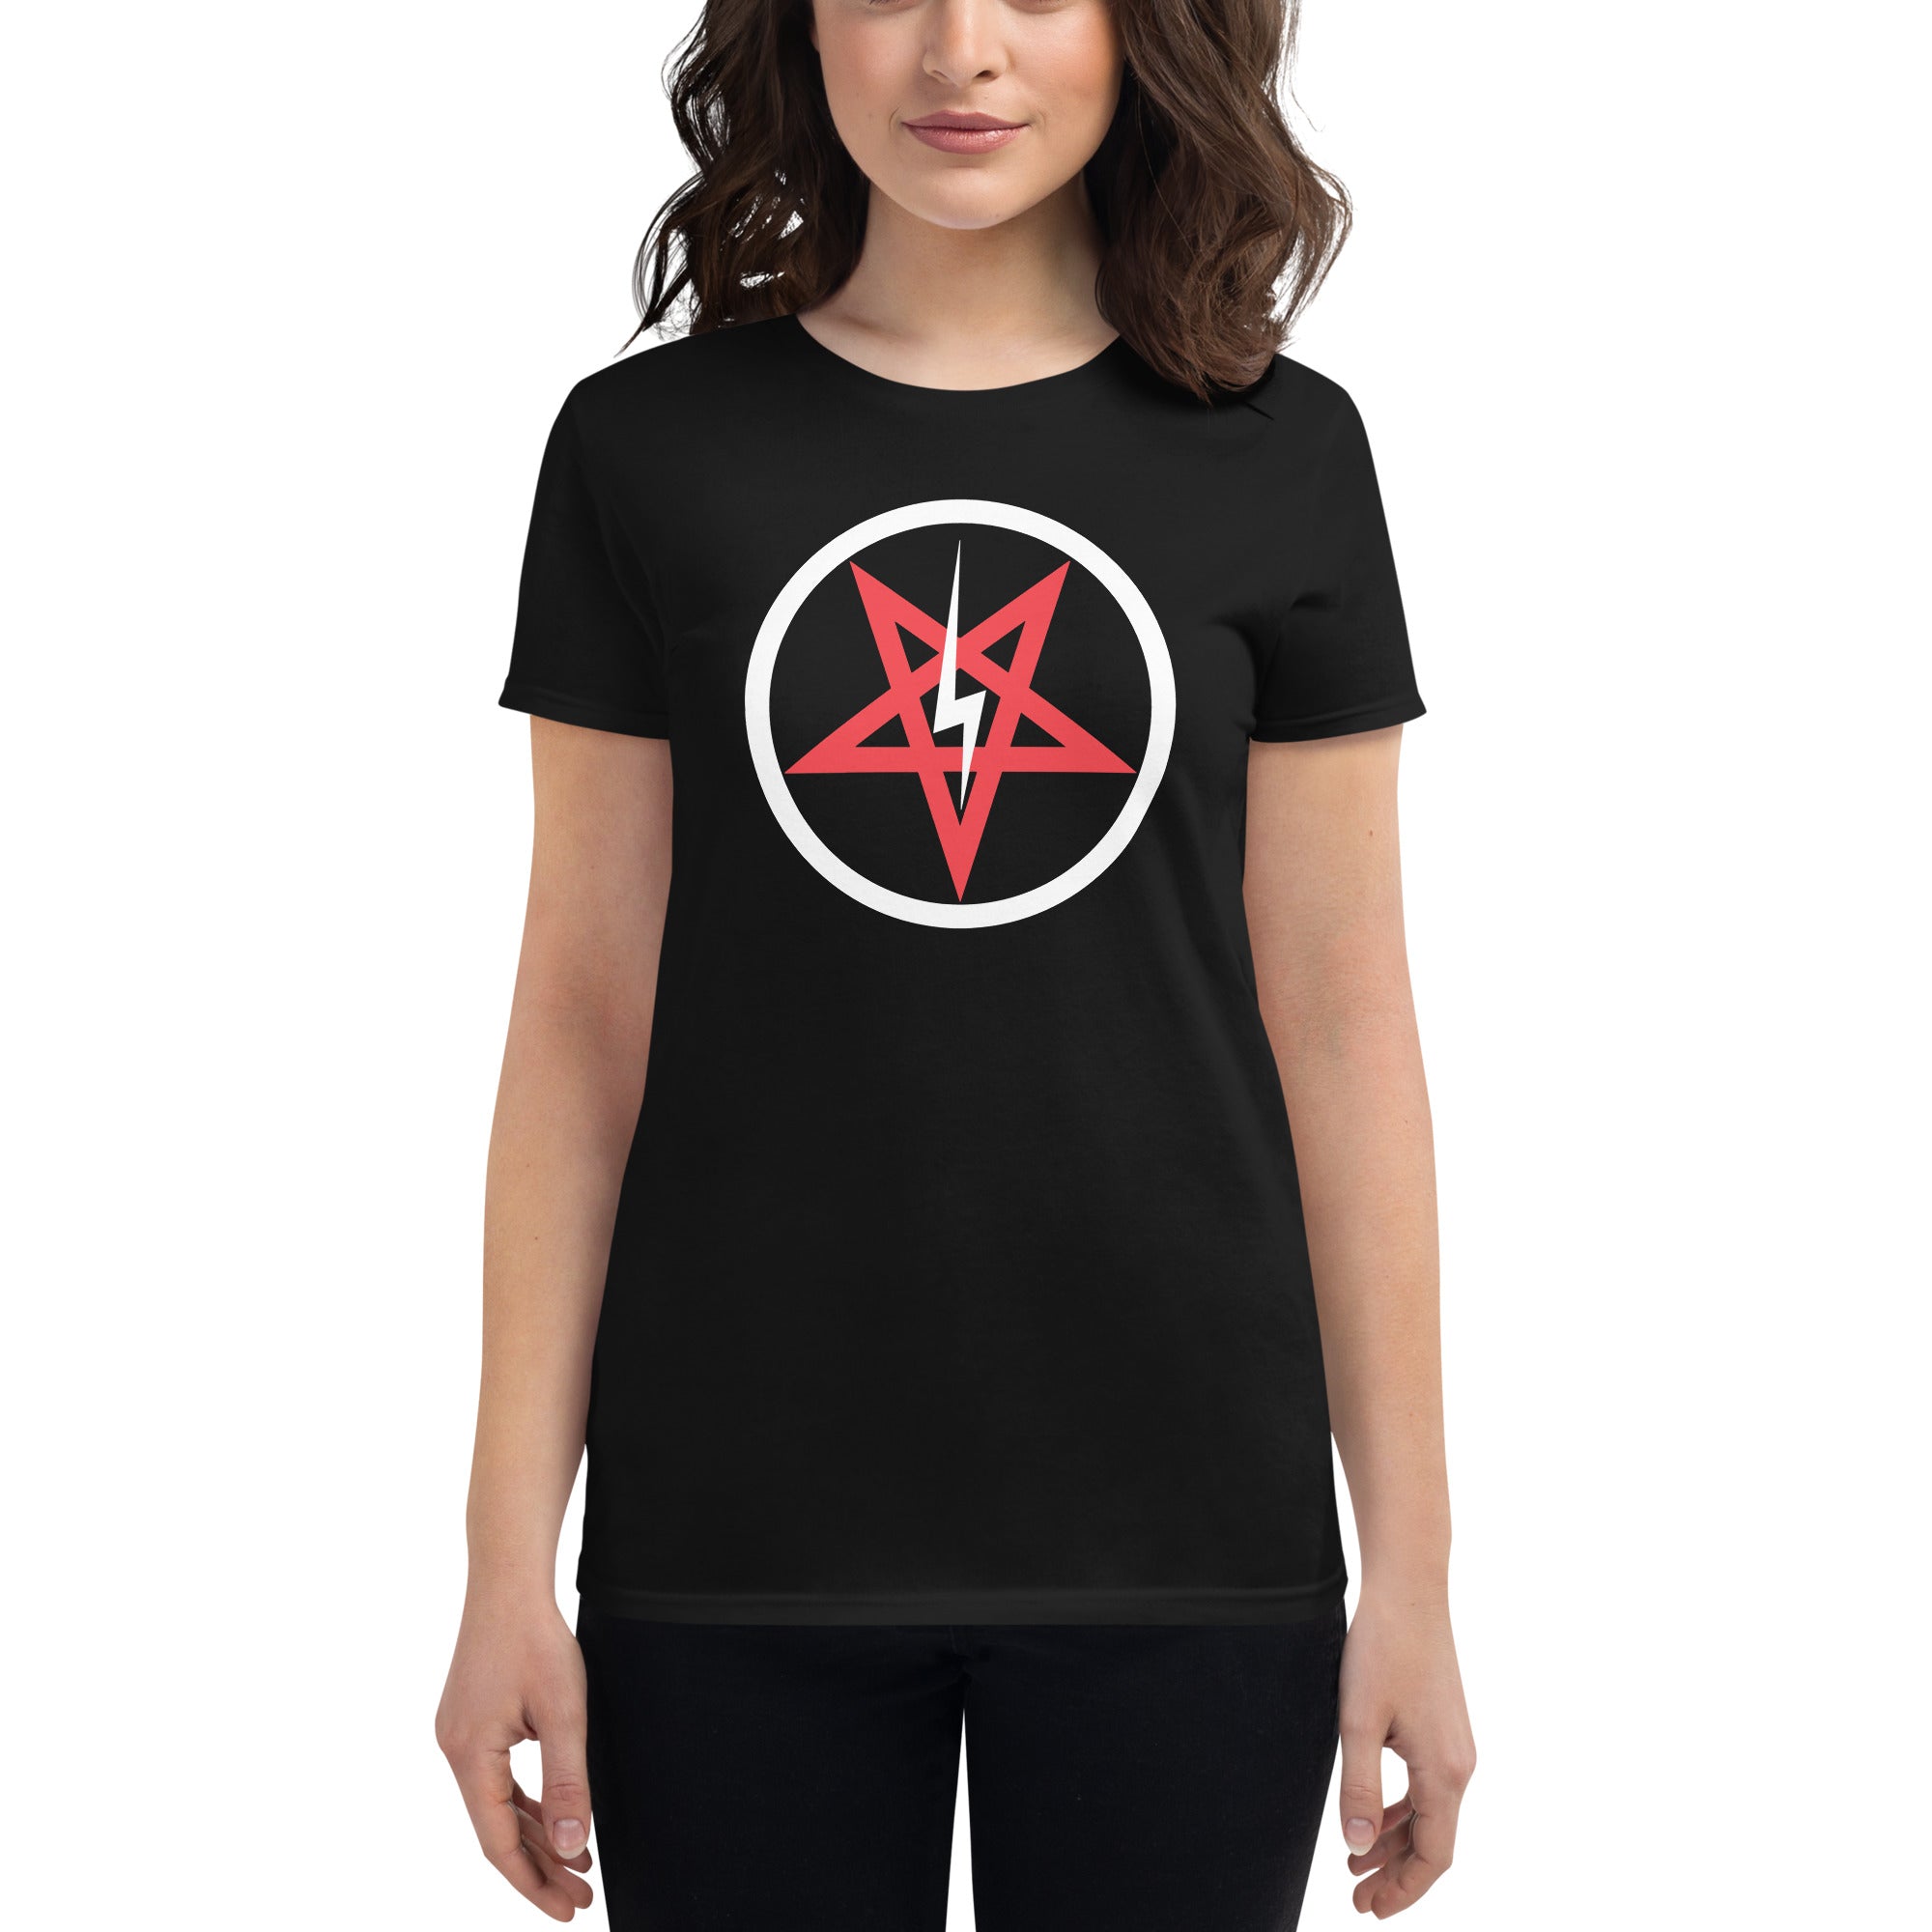 Satanic Church Sigil Bolt Inverted Pentagram Women's Short Sleeve Babydoll T-shirt